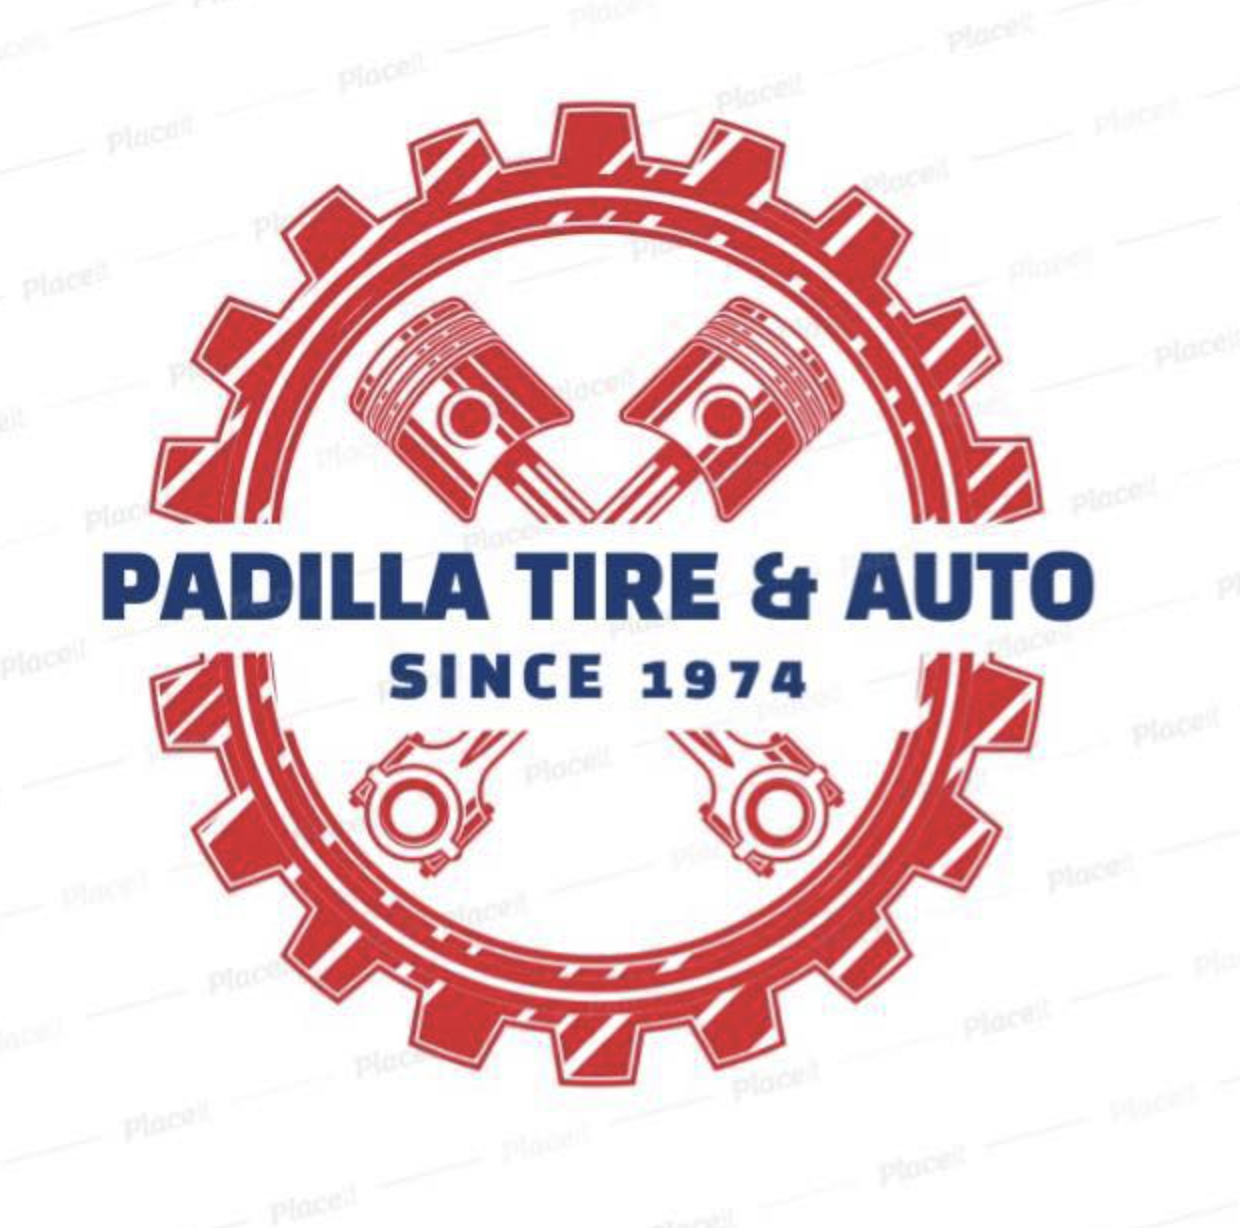 Padilla Tire And Auto Repair - Fontana Business Listings.com